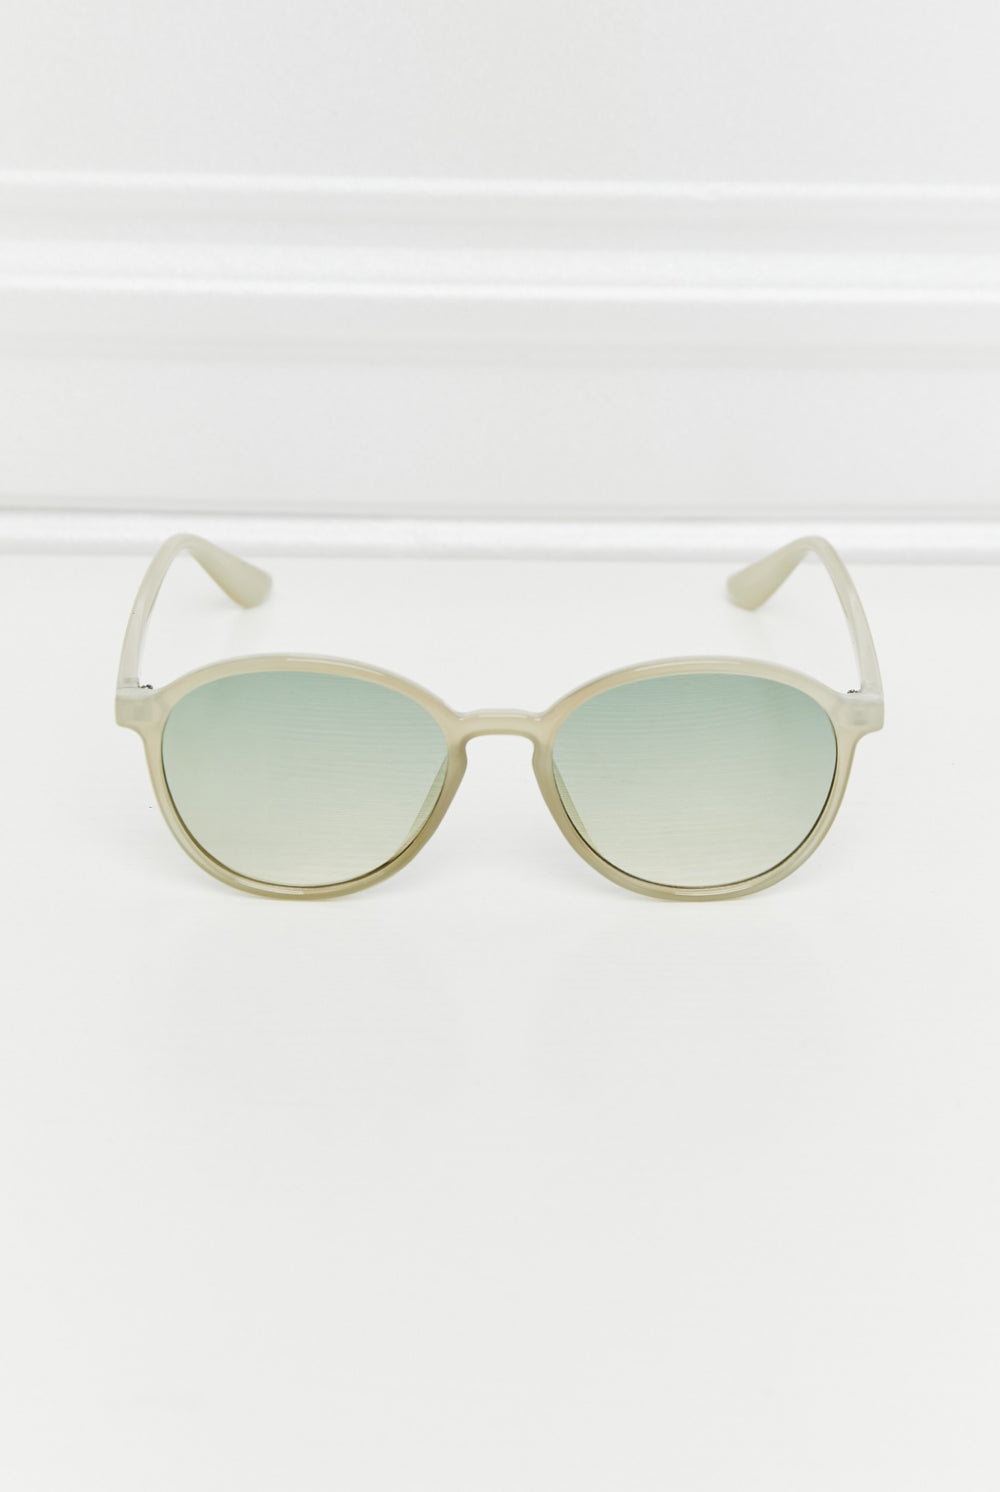 Lavender Nature Full Rim Polycarbonate Frame Sunglasses Sunglasses